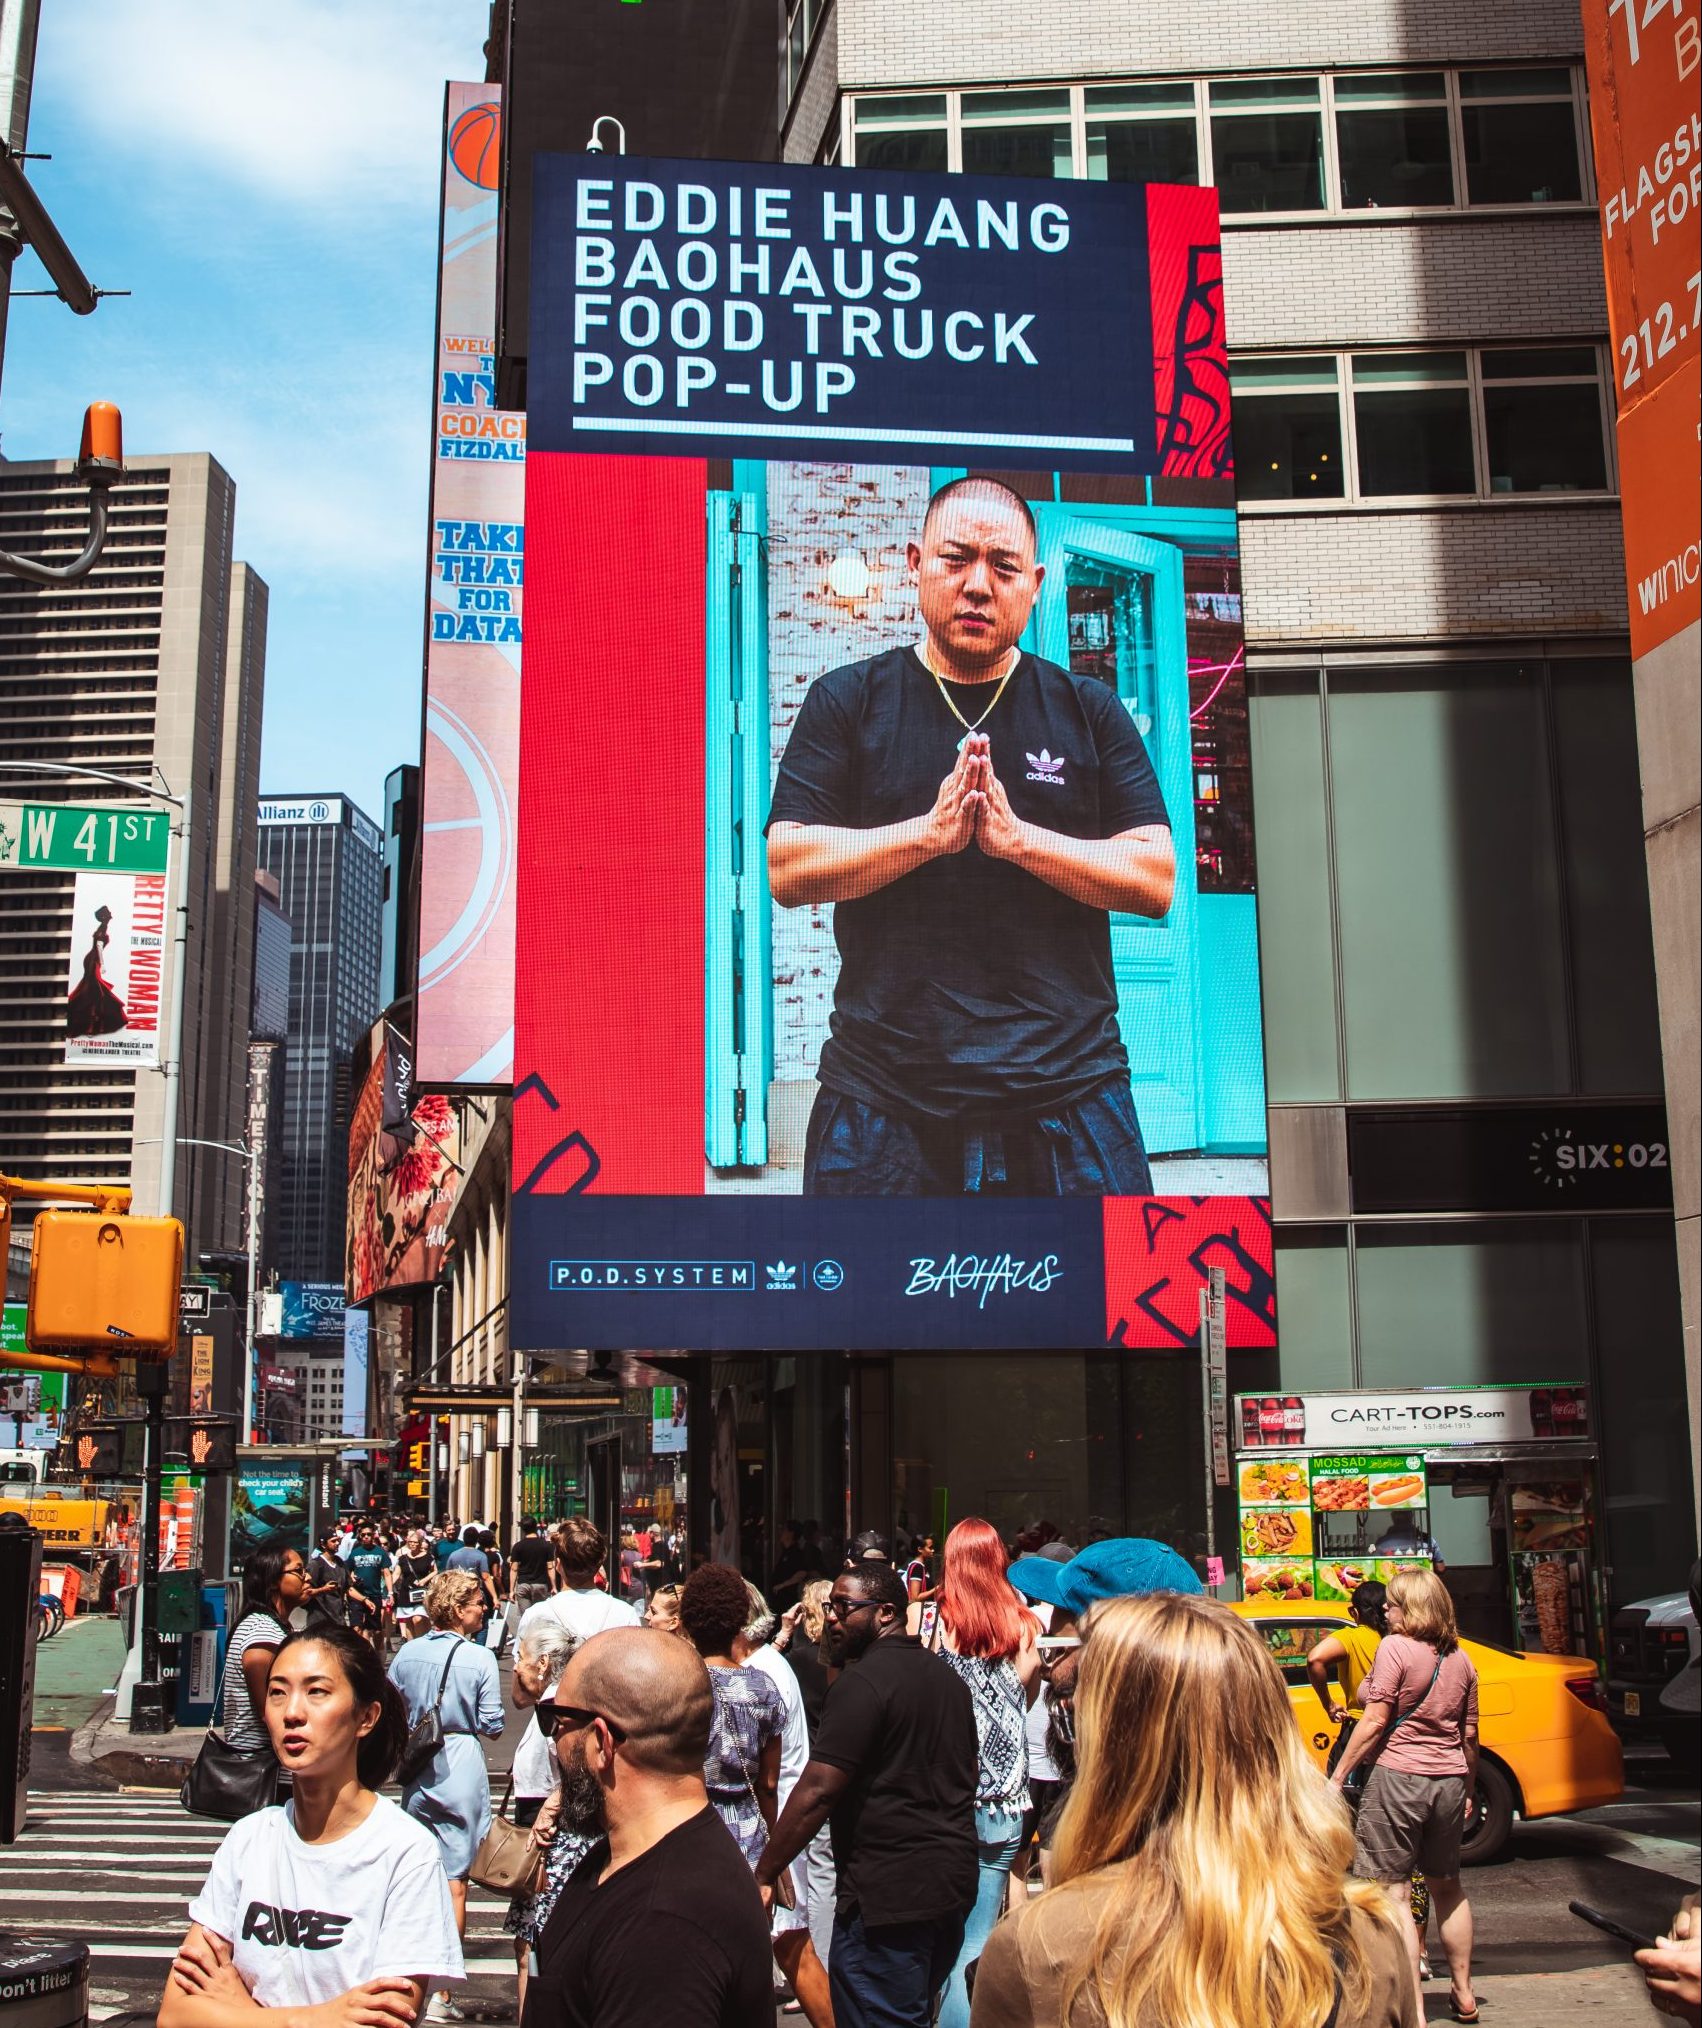 Adidas Eddie Haung Food Truck Pop-Up